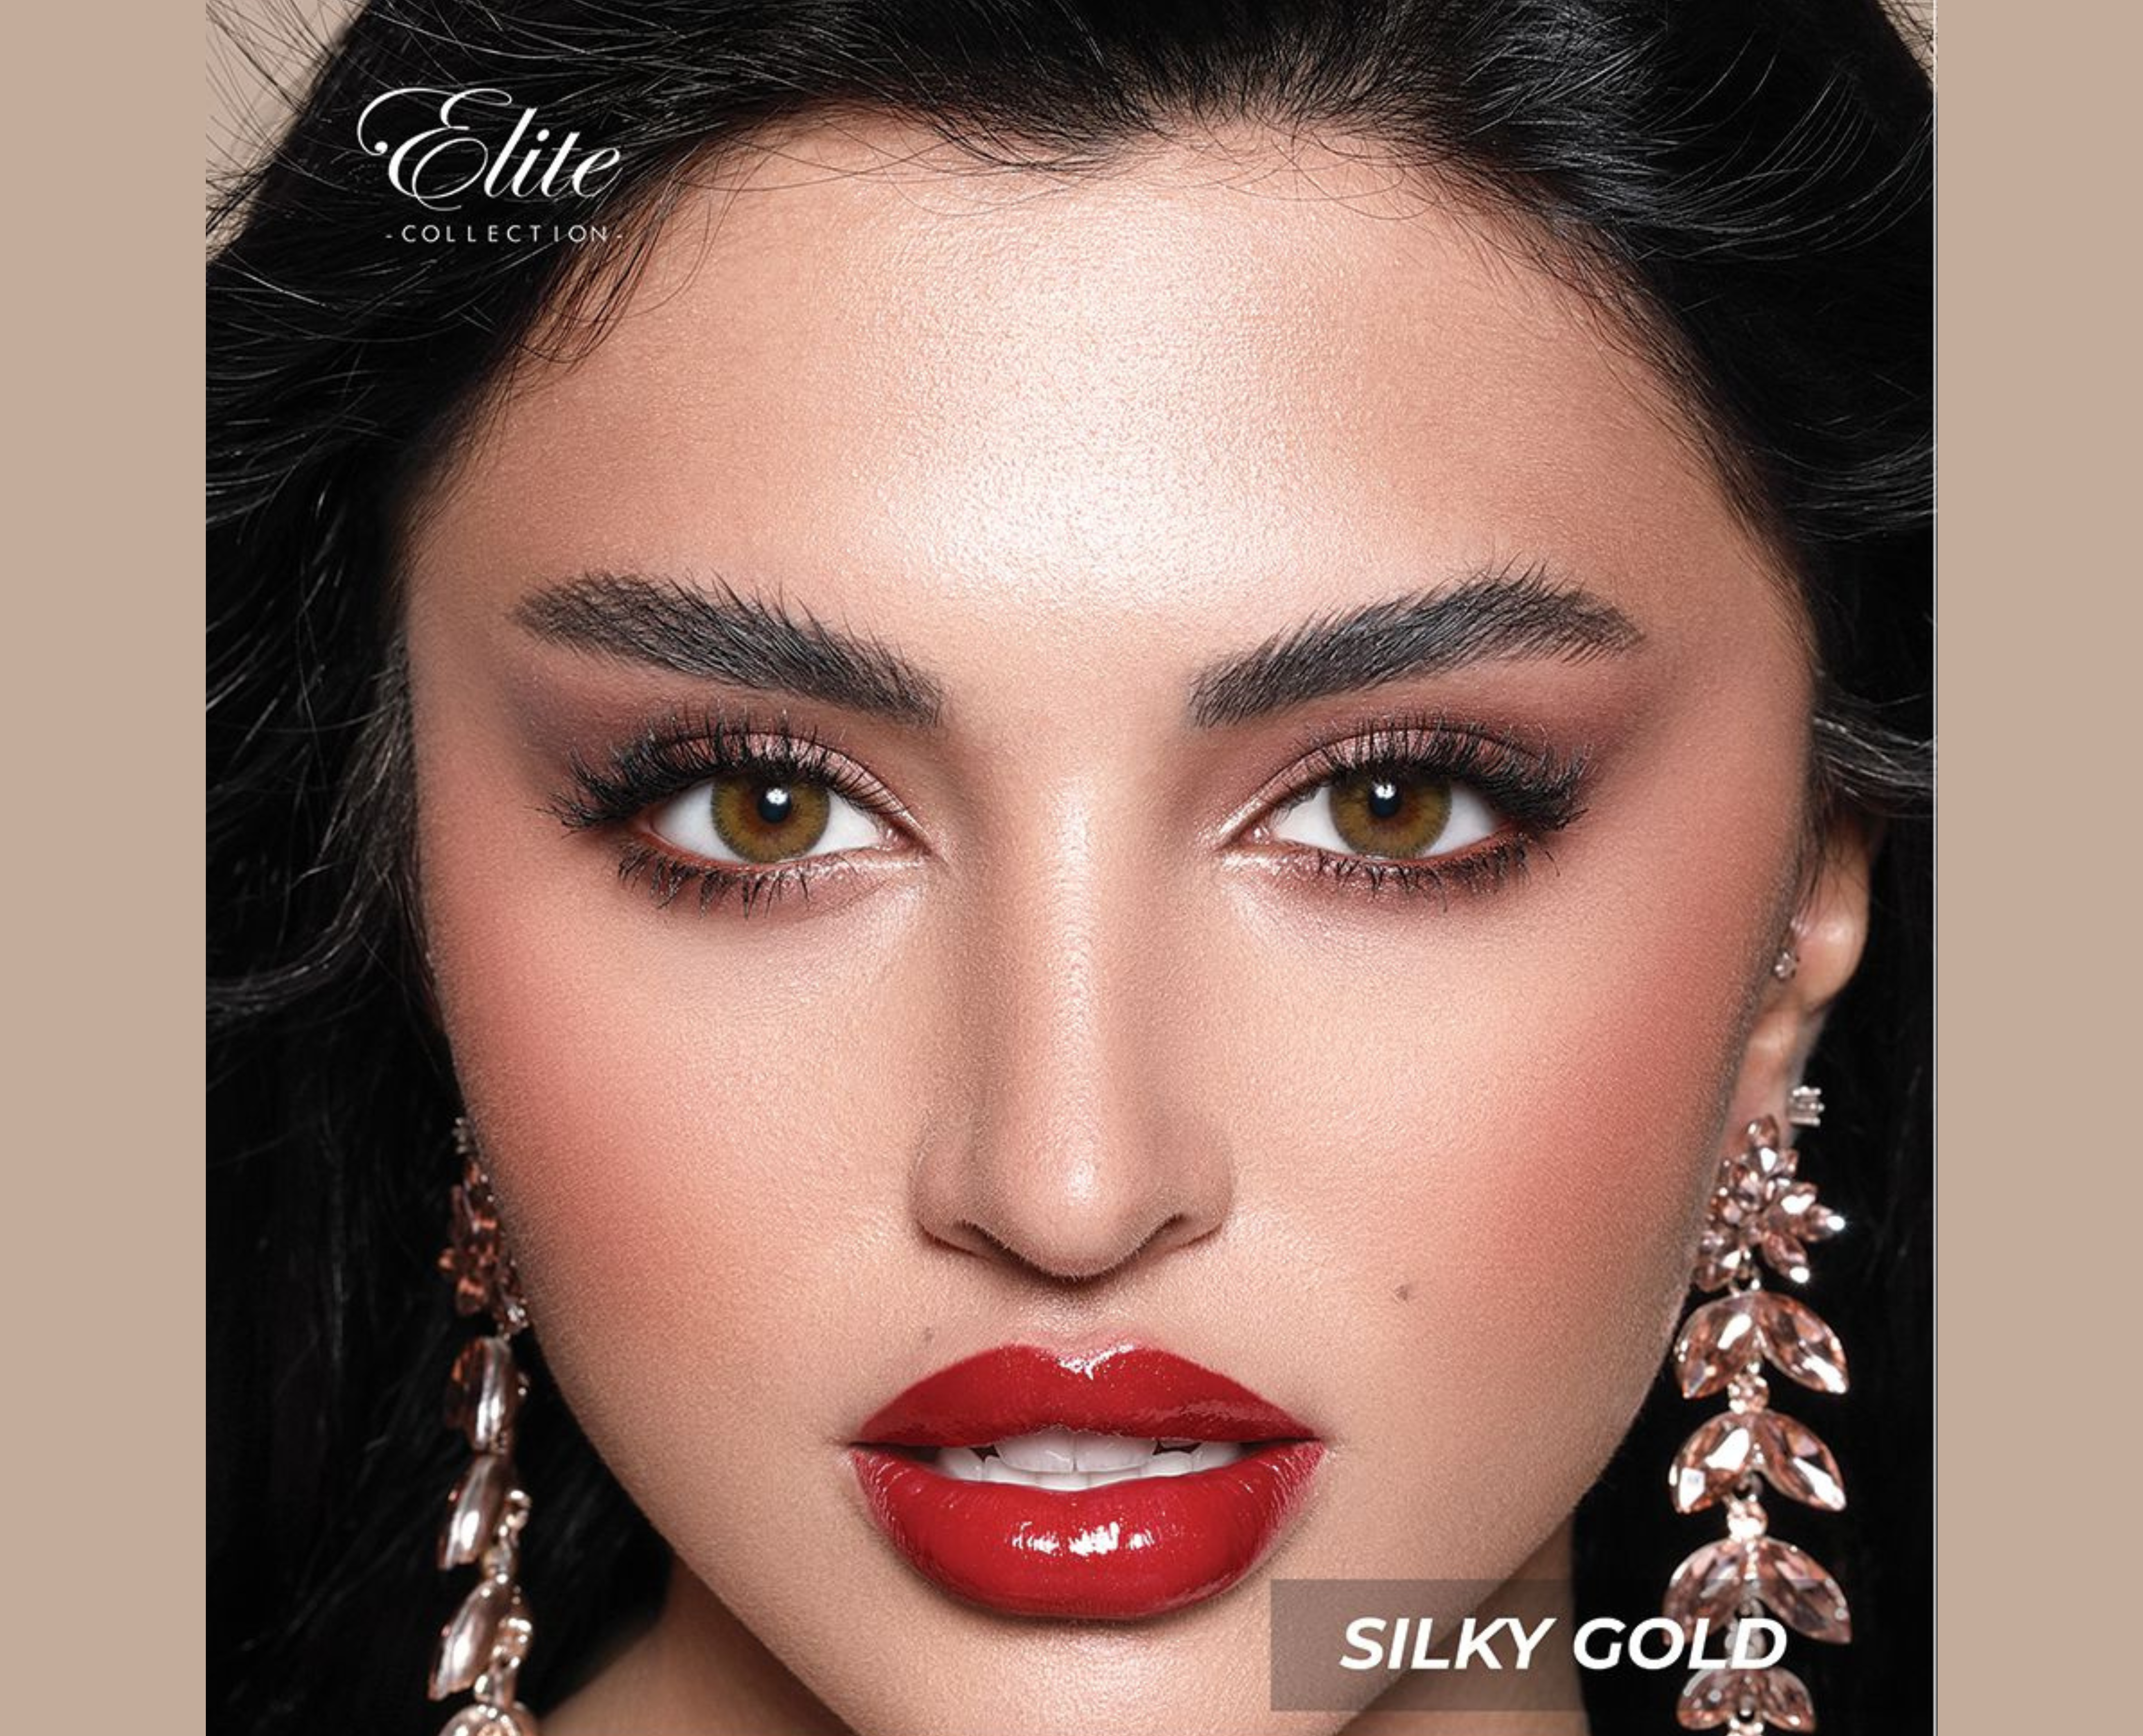 Bella Elite Colored Lenses - Silky Gold